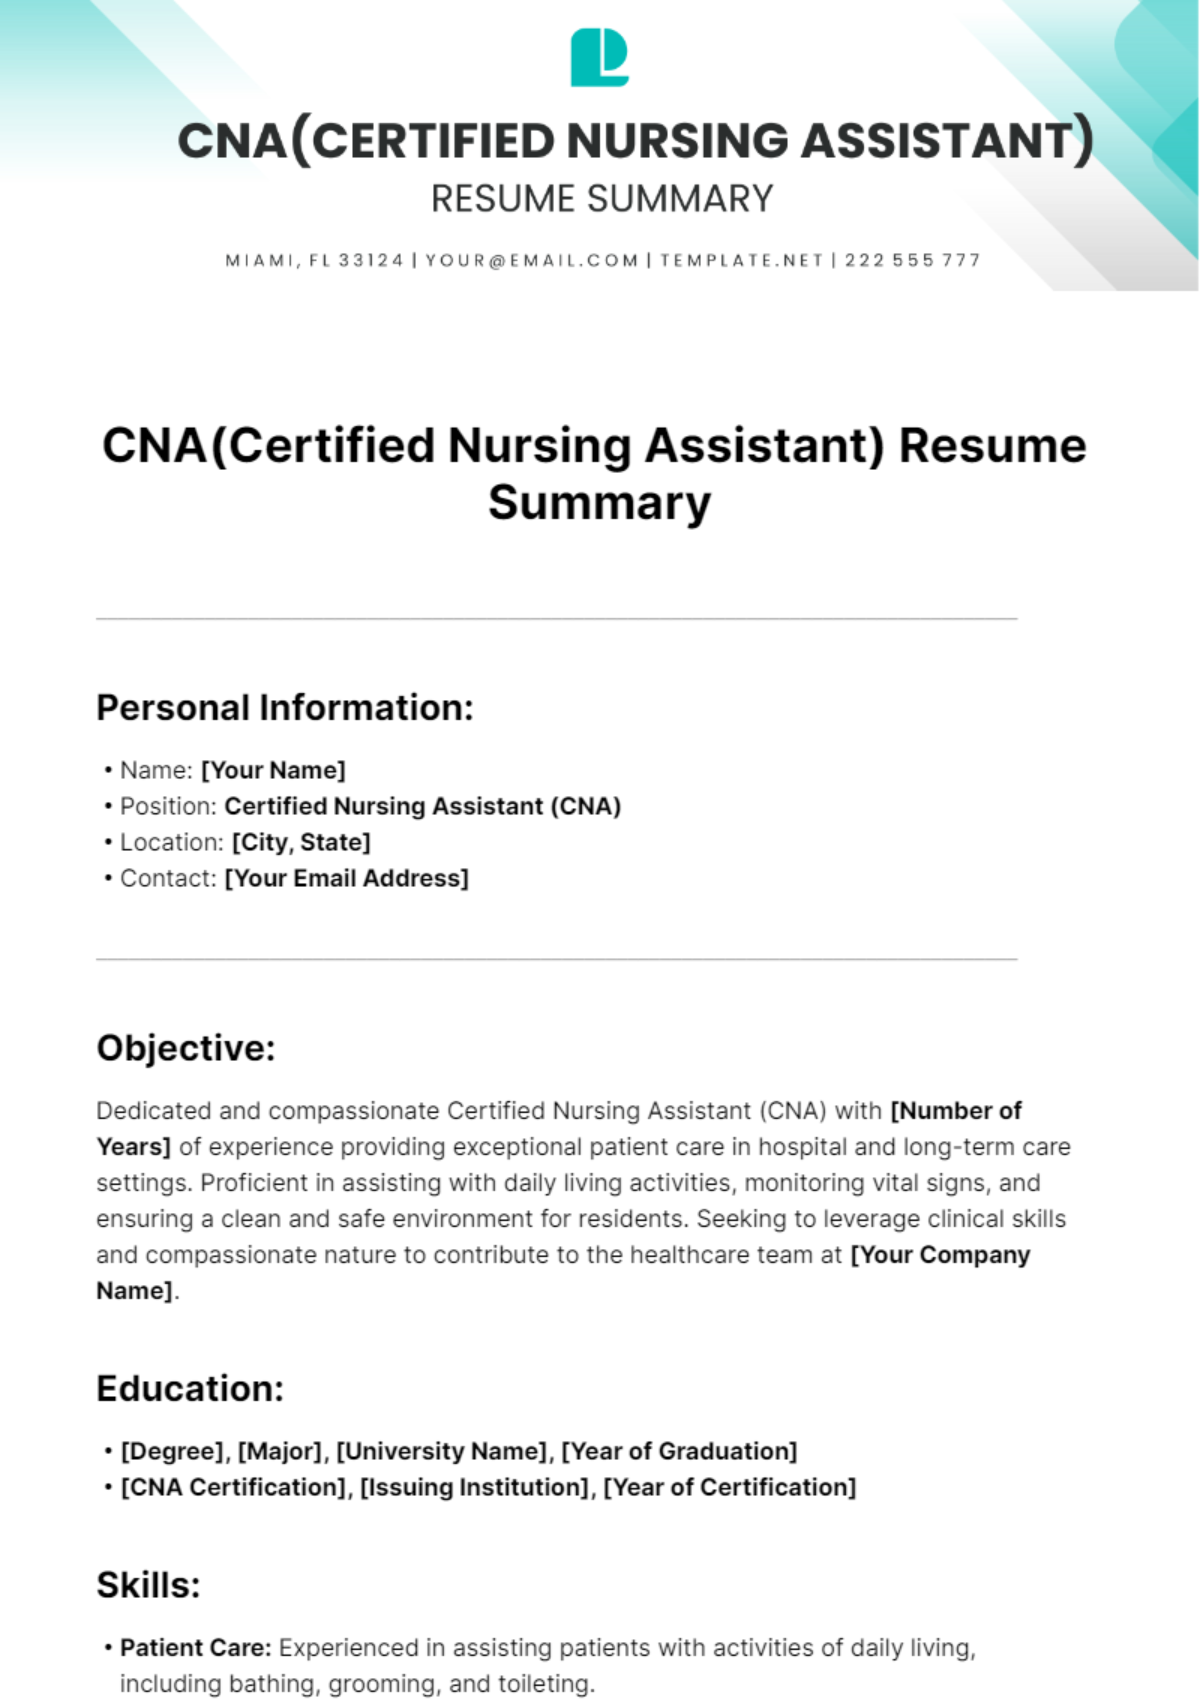 Cna(Certified Nursing Assistant) Resume Summary Template